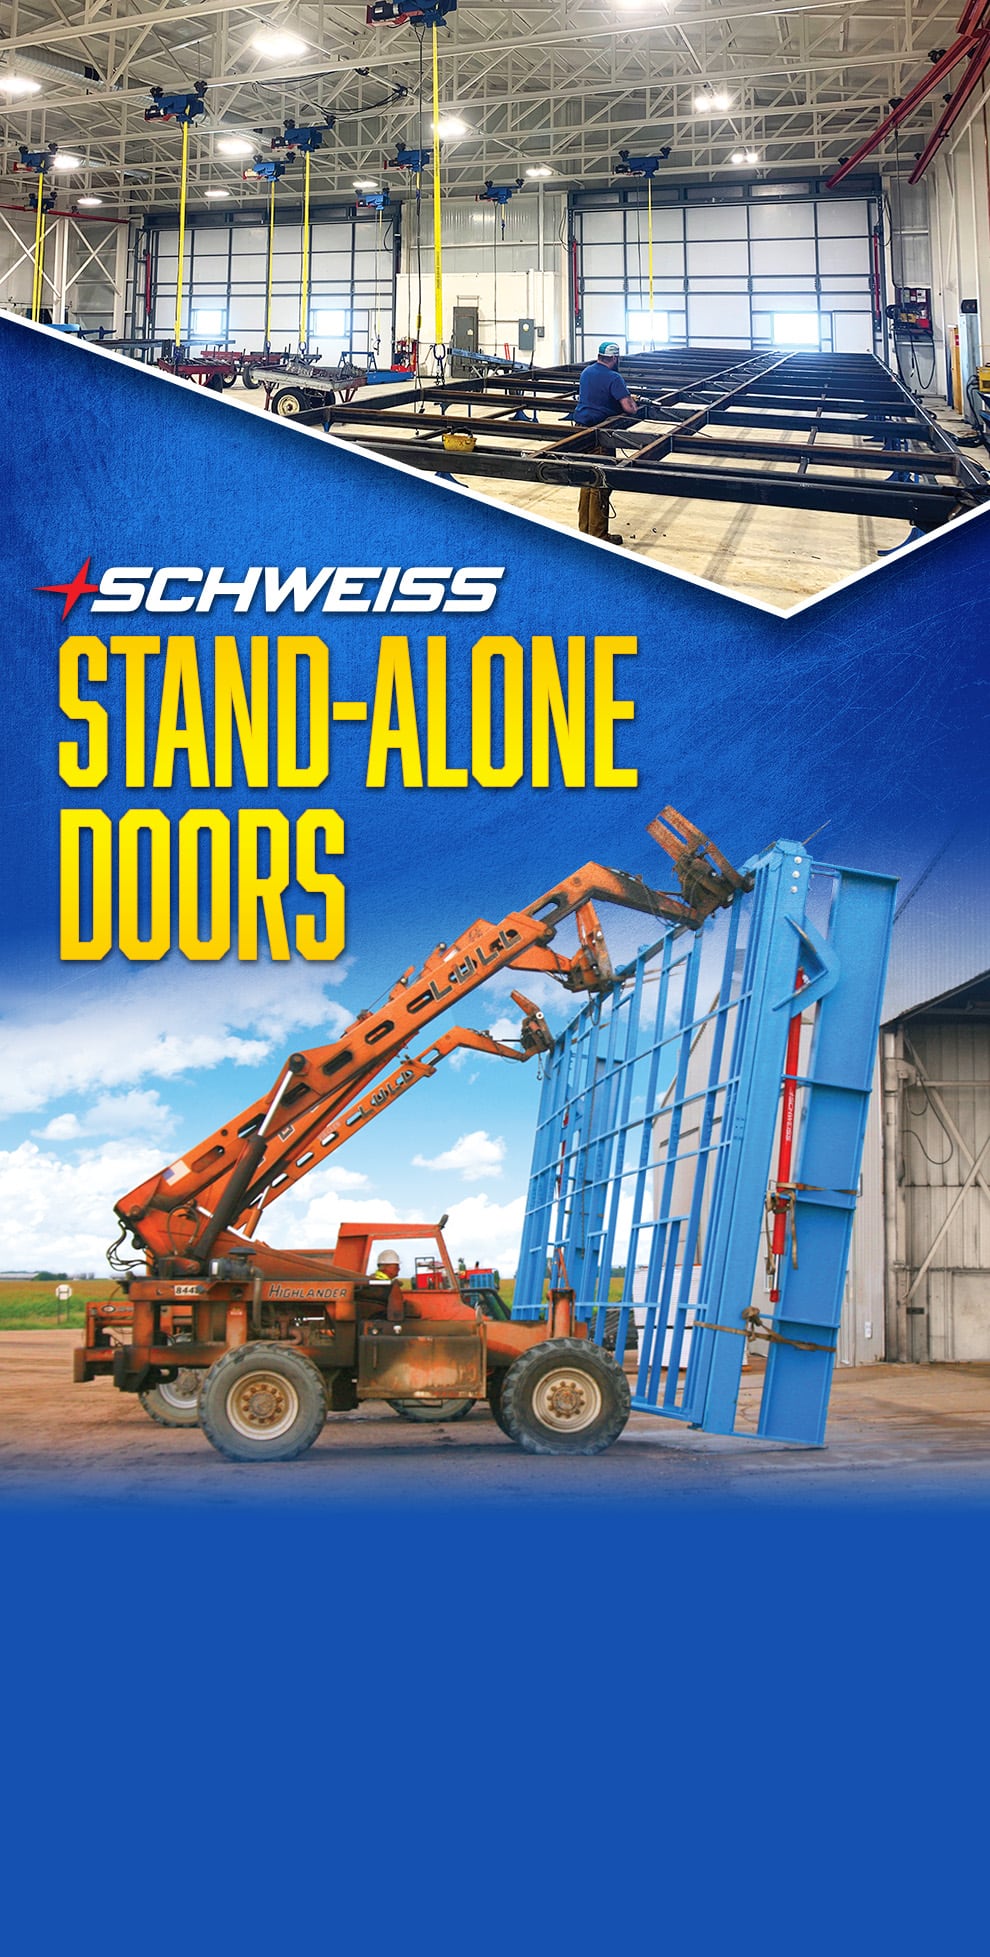 Schweiss Stand-Alone Doors